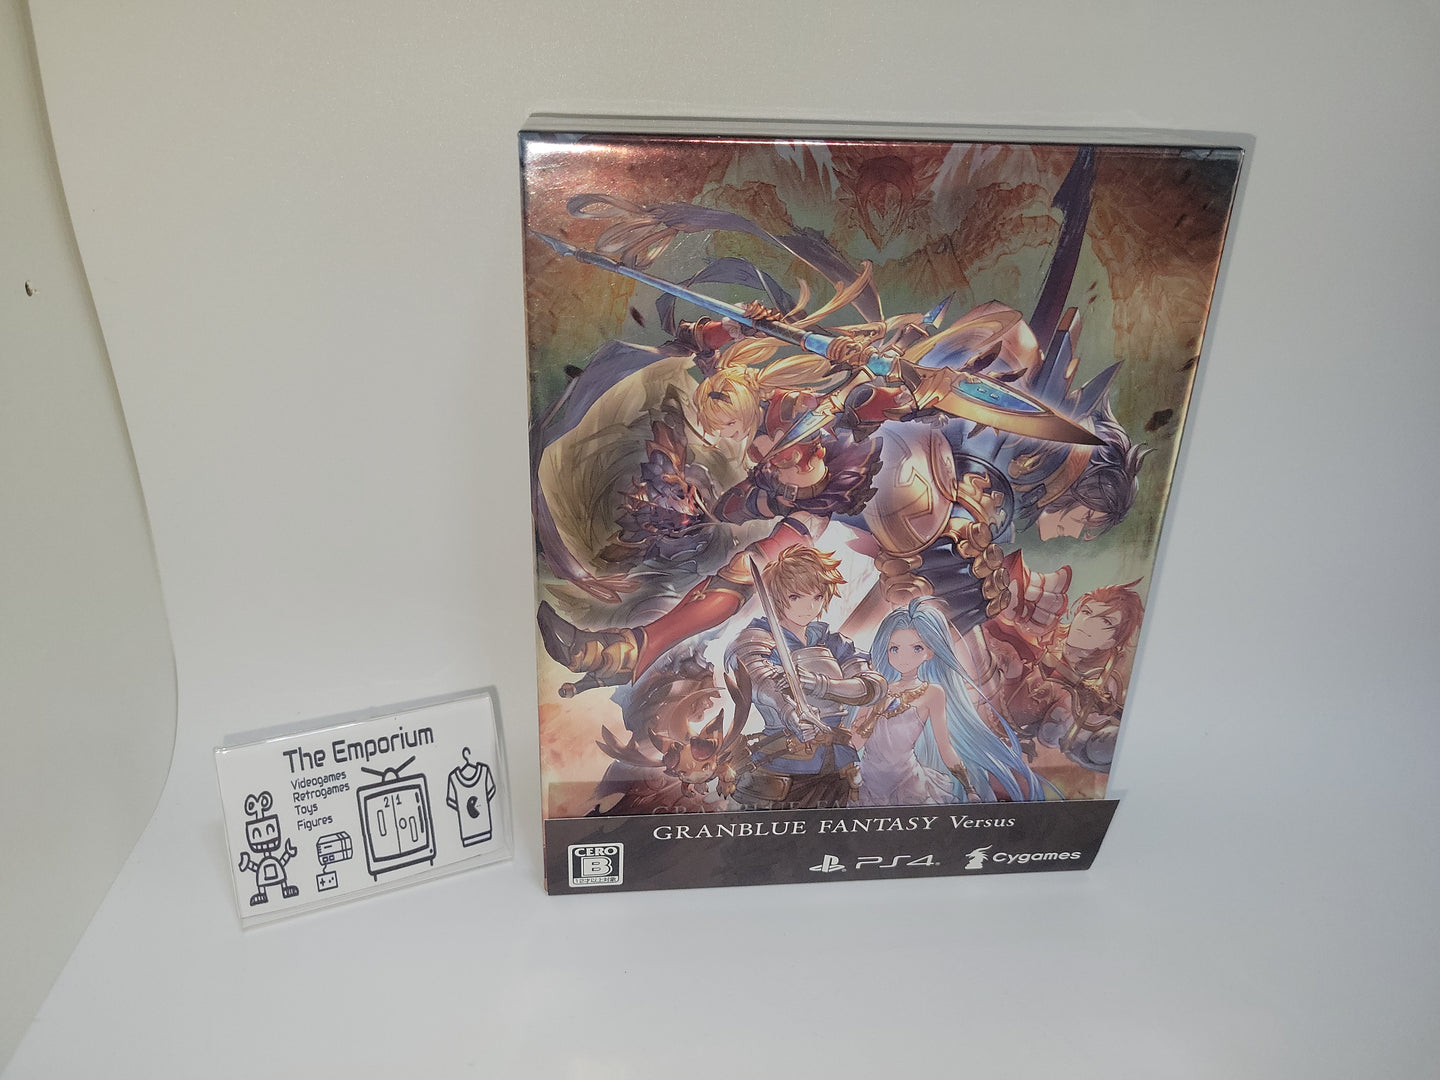 Granblue Fantasy Versus (Premium Box) [Limited Edition] - Sony PS4 Playstation 4